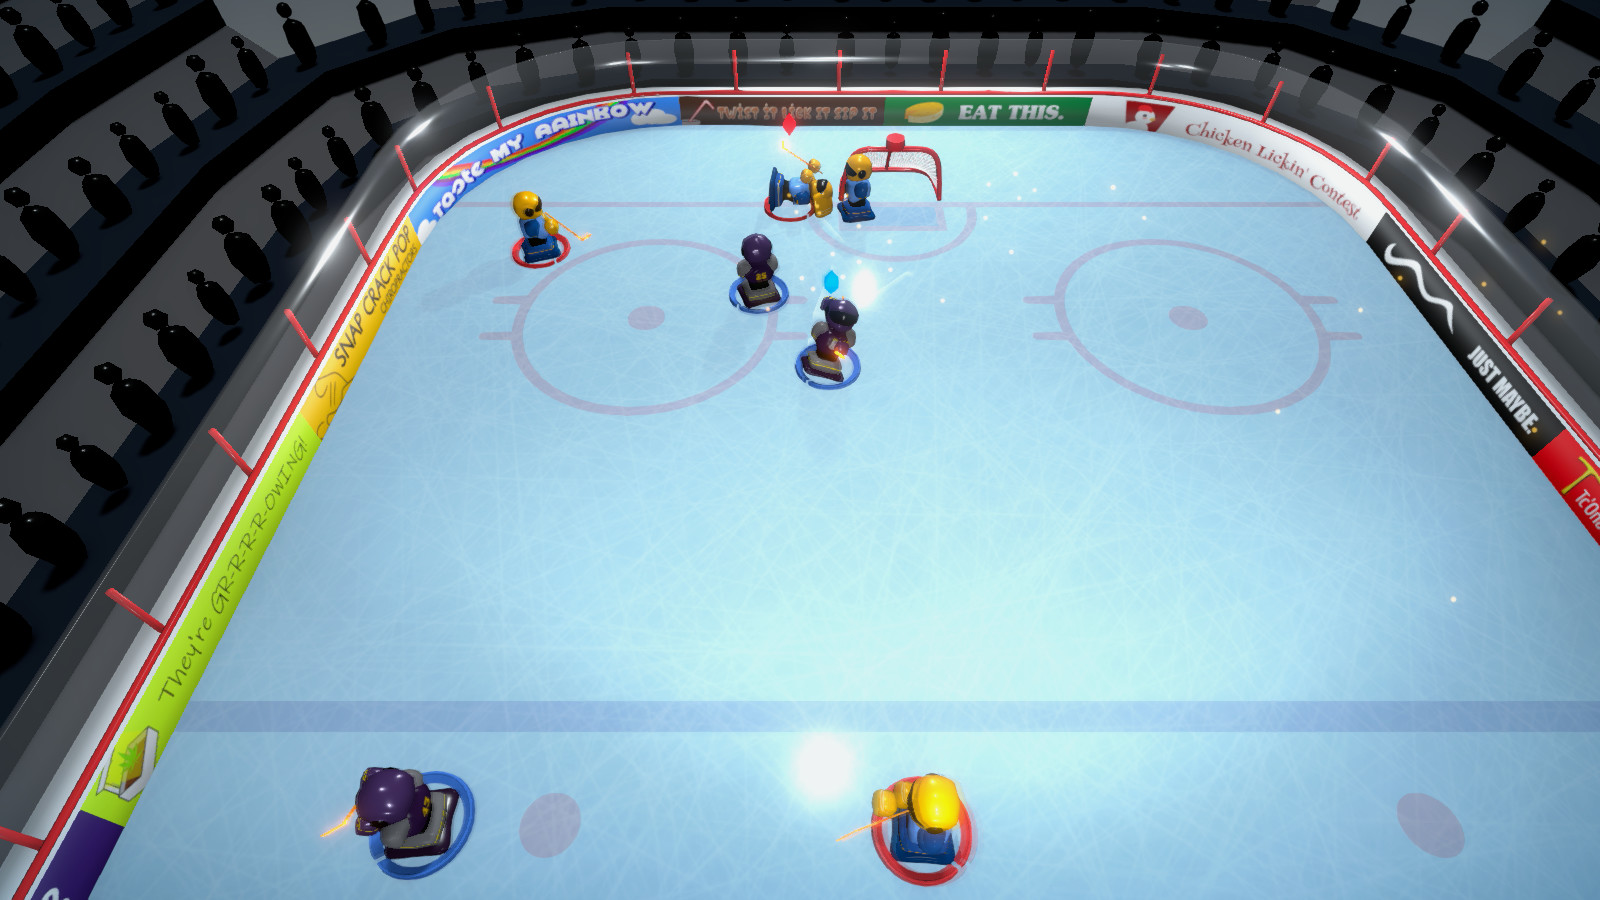 3 on 3 Super Robot Hockey Free Download